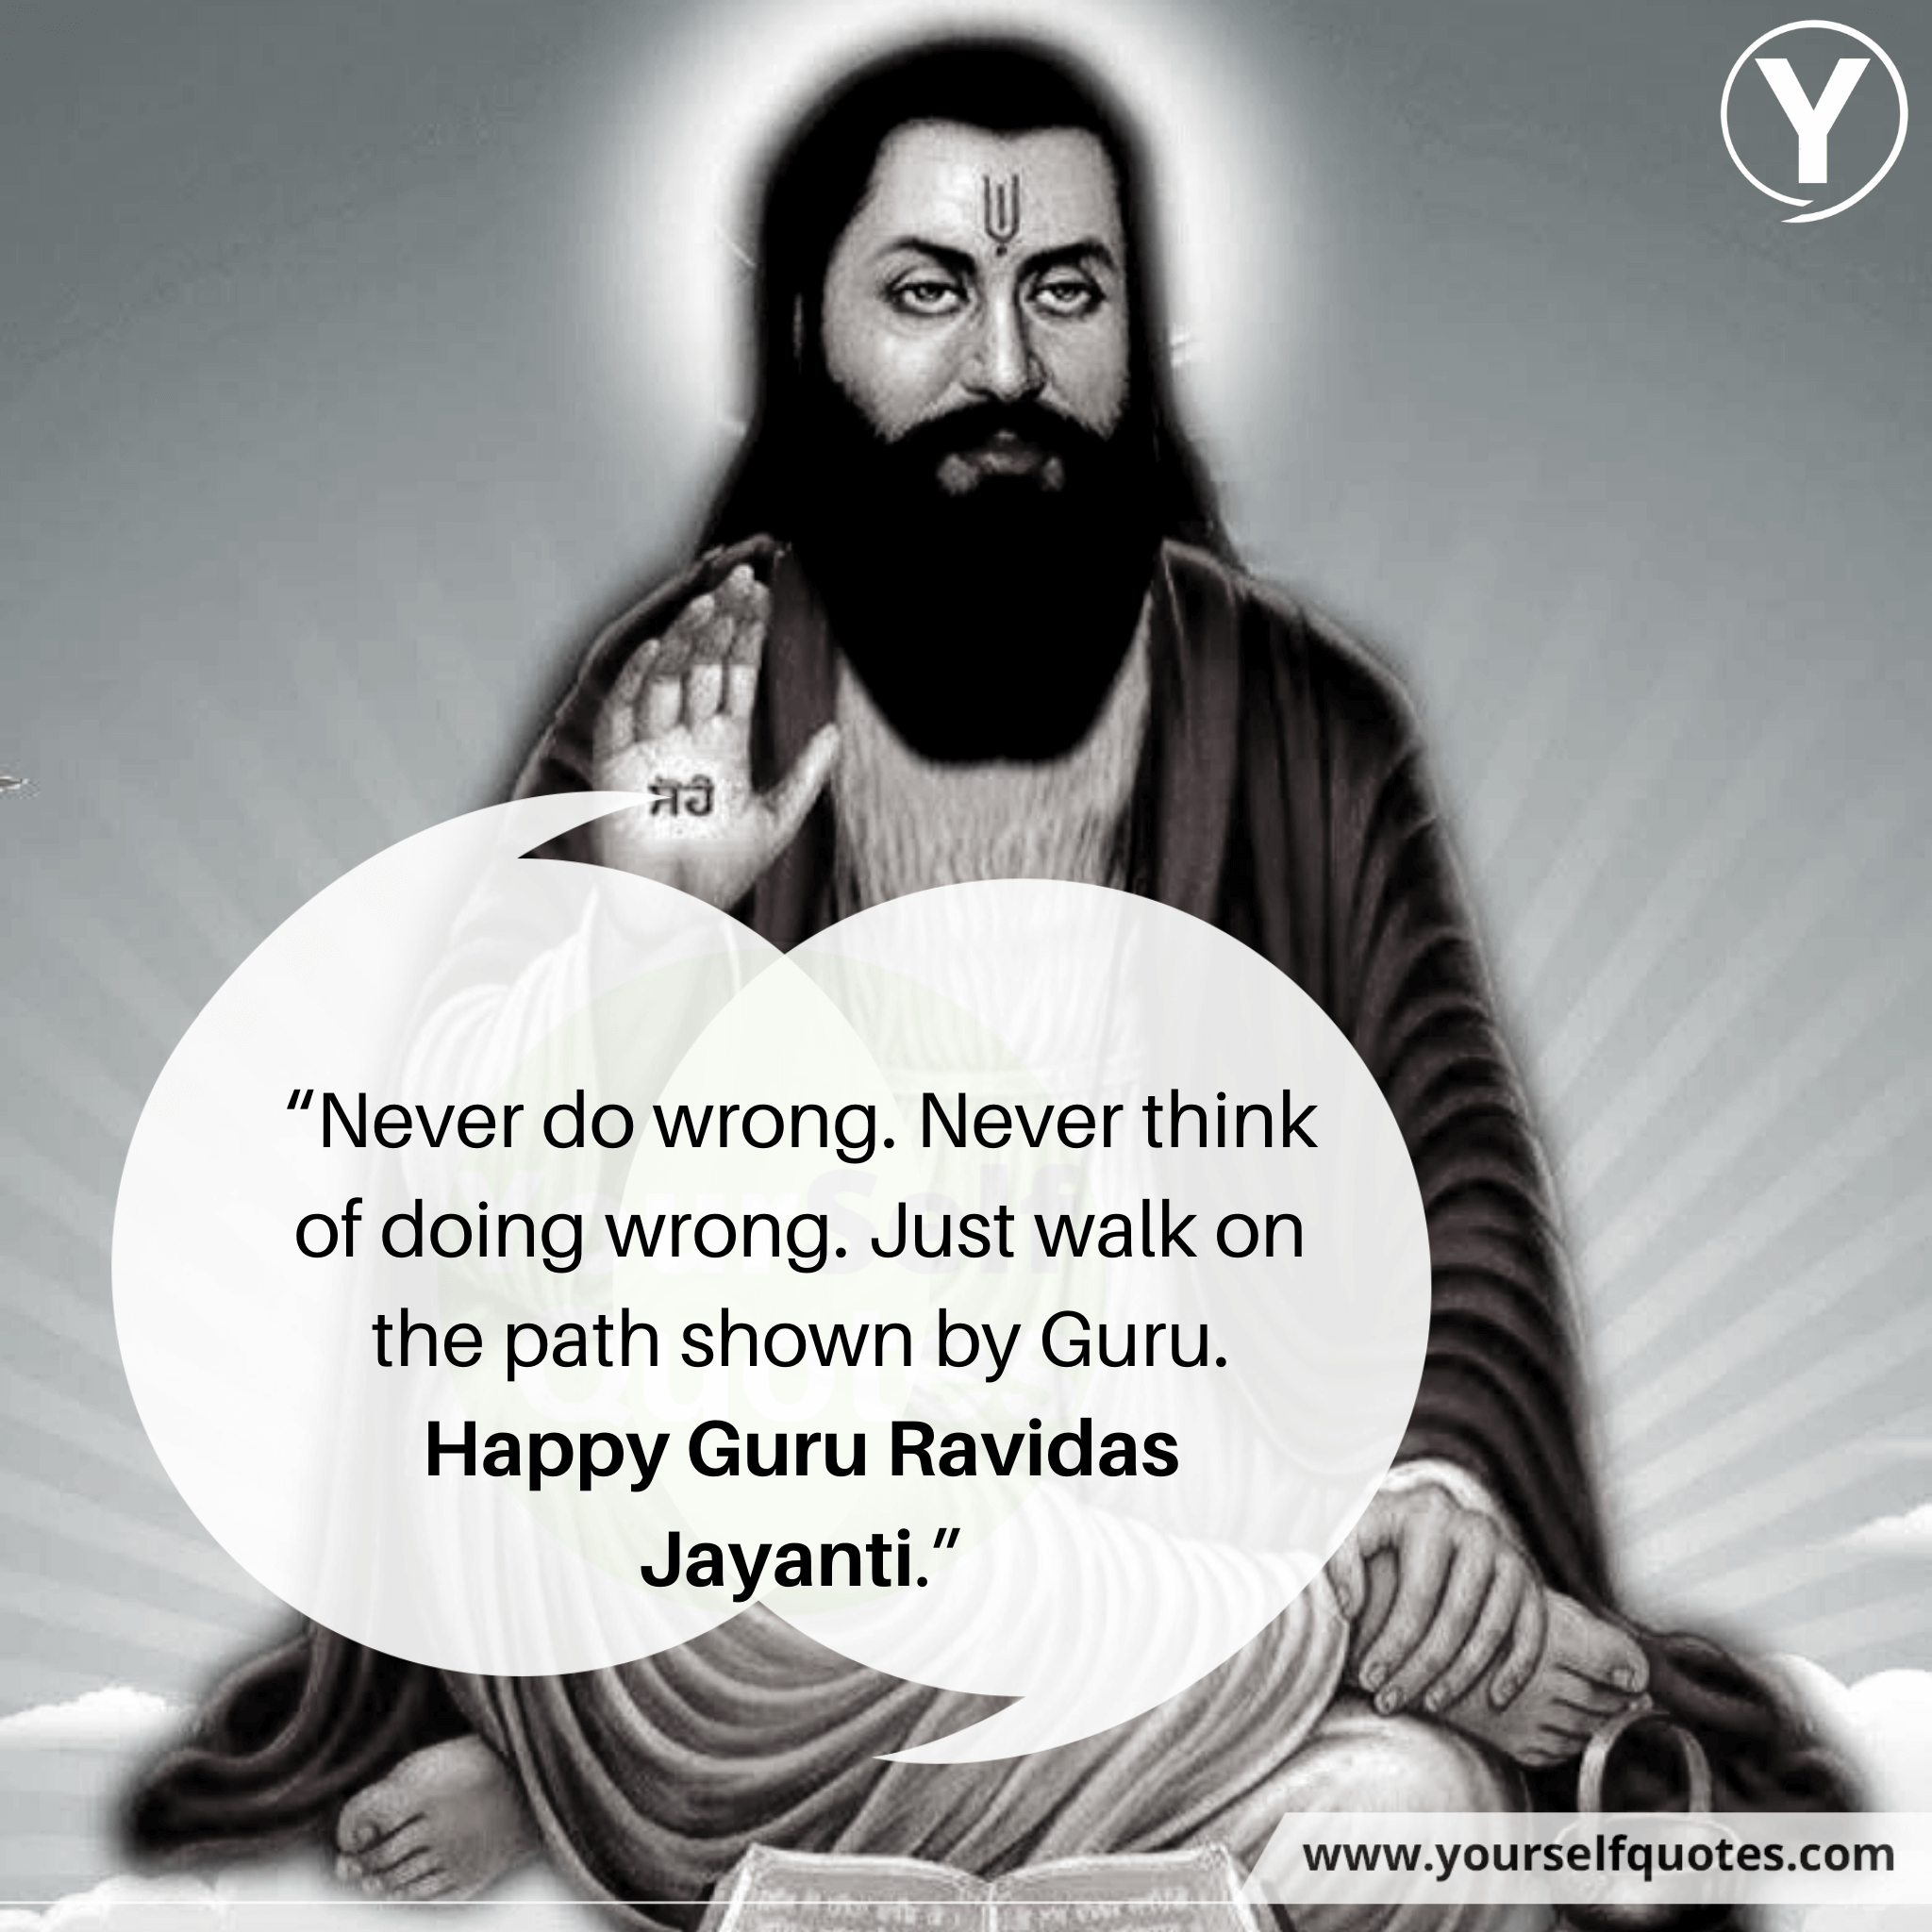 Happy Ravidas Jayanti Quotes